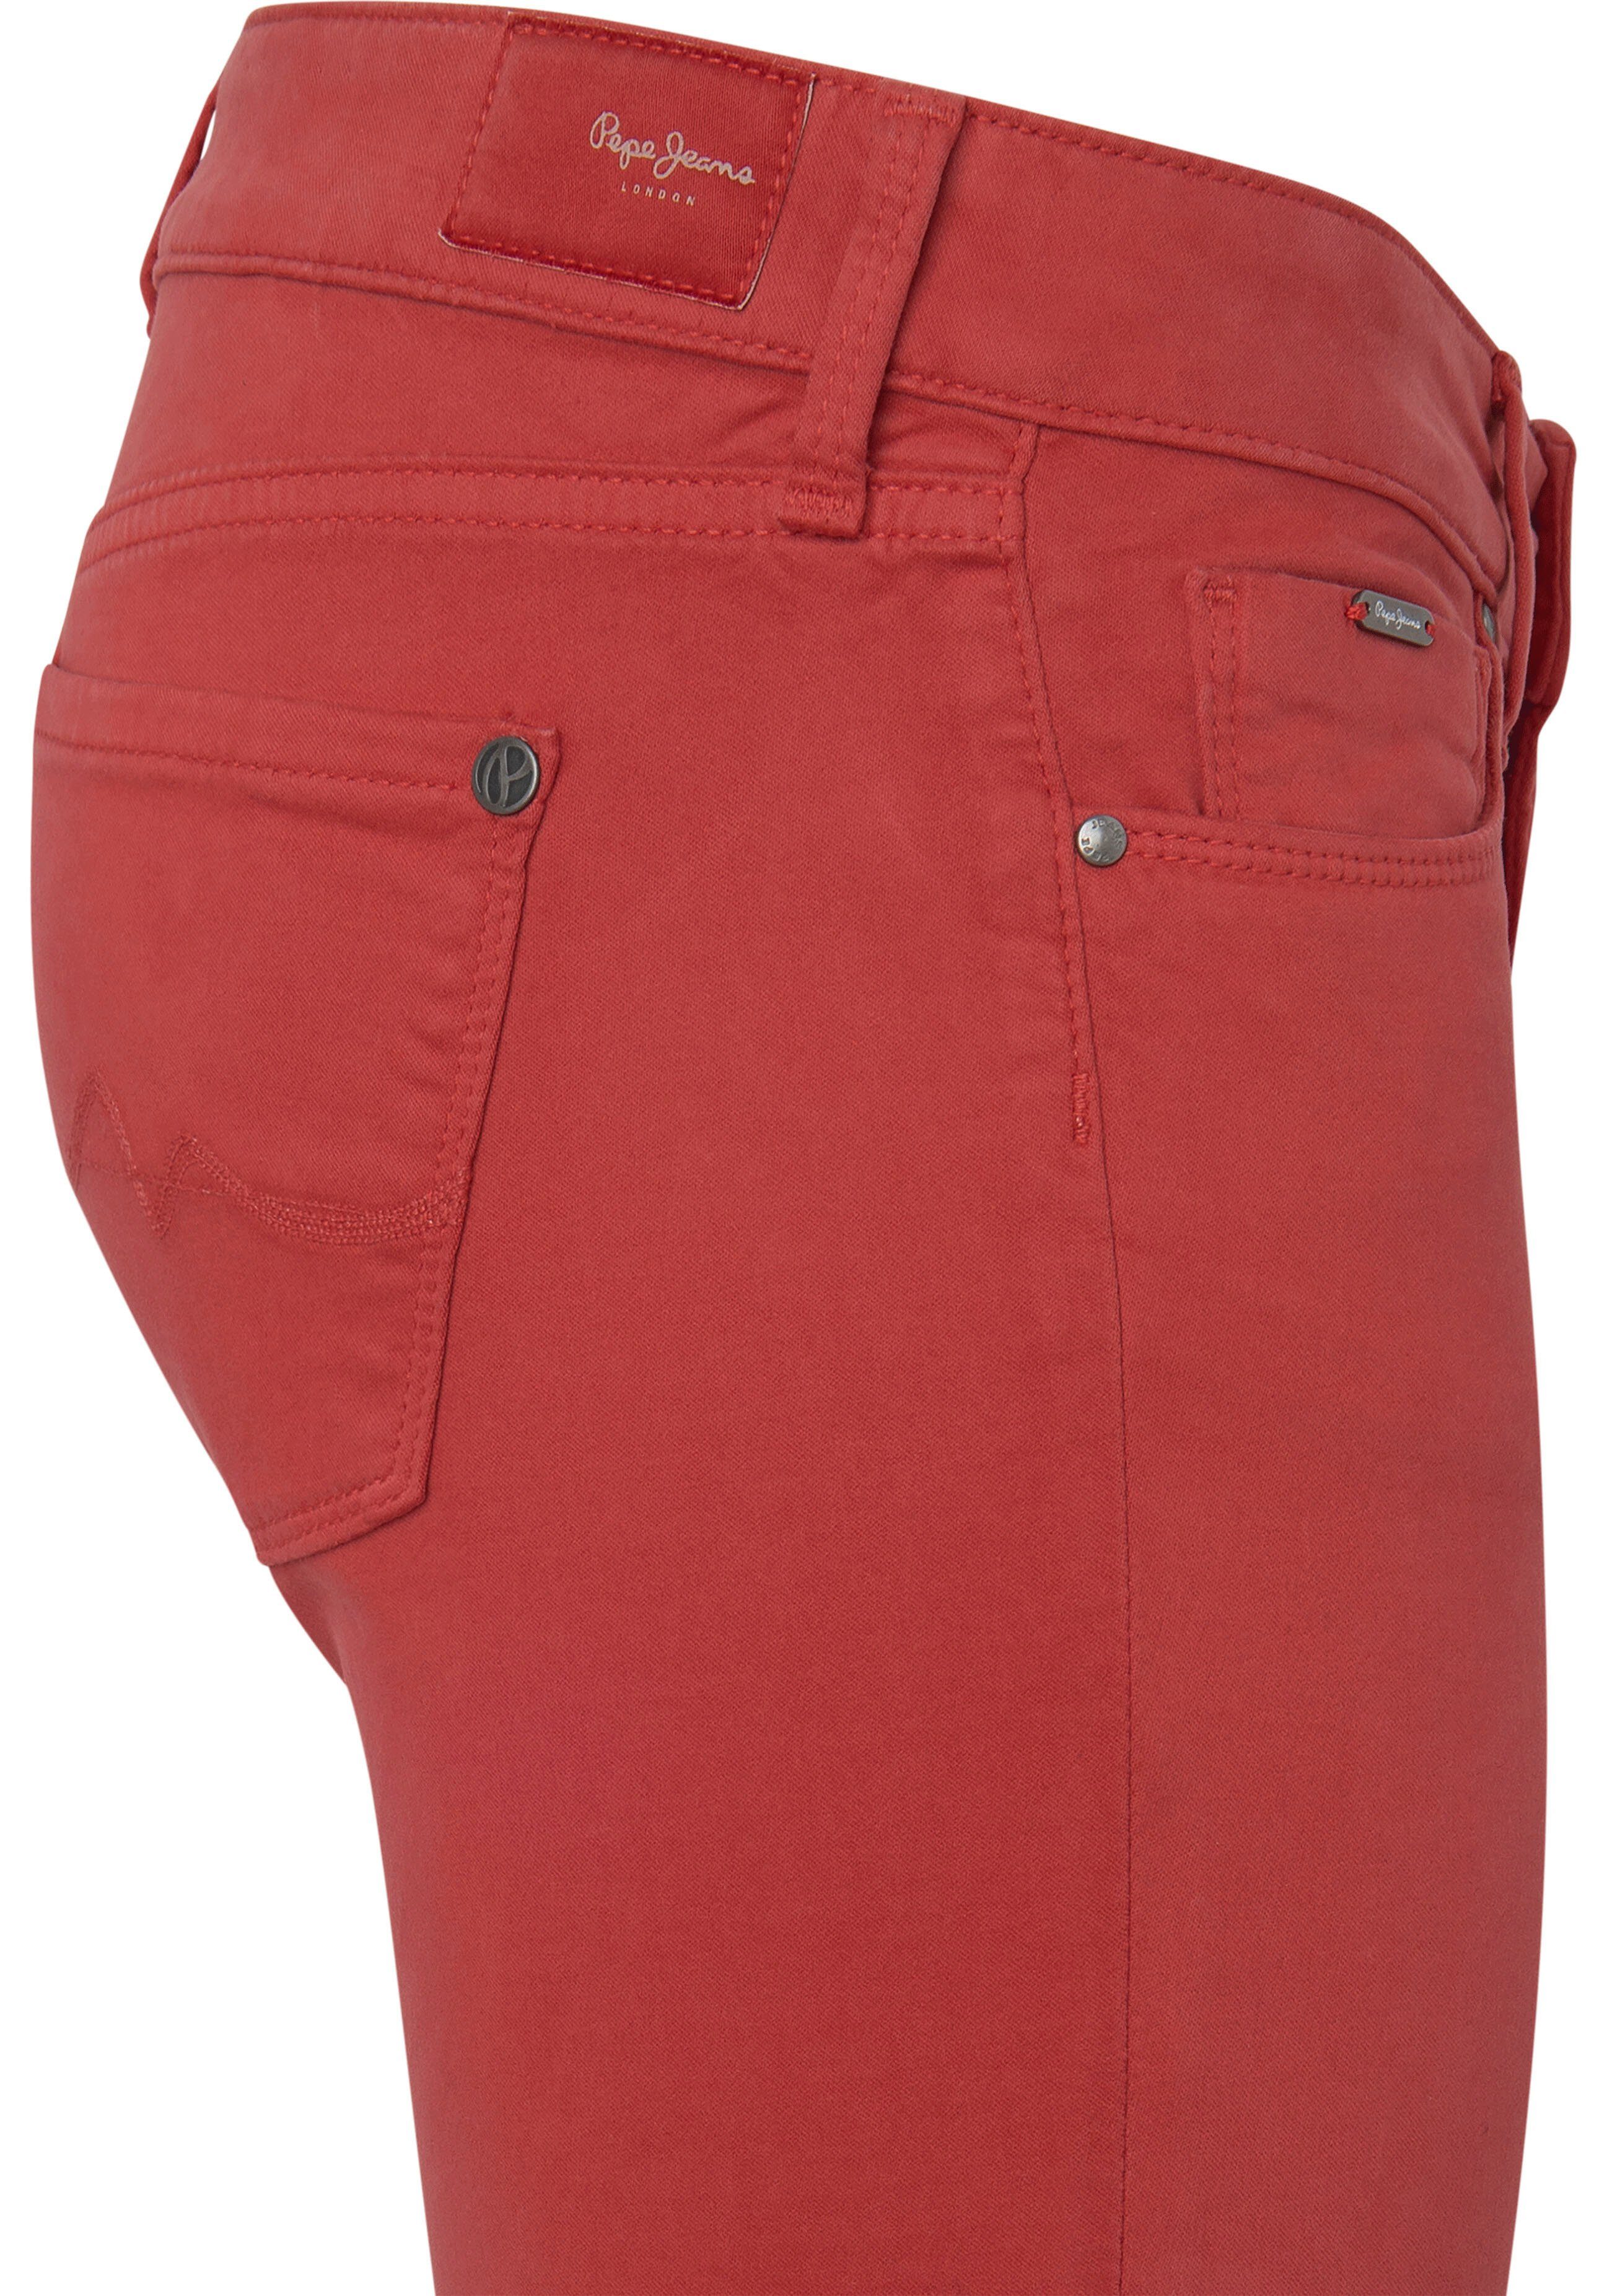 studio 5-Pocket-Hose Jeans Skinny red Soho Pepe